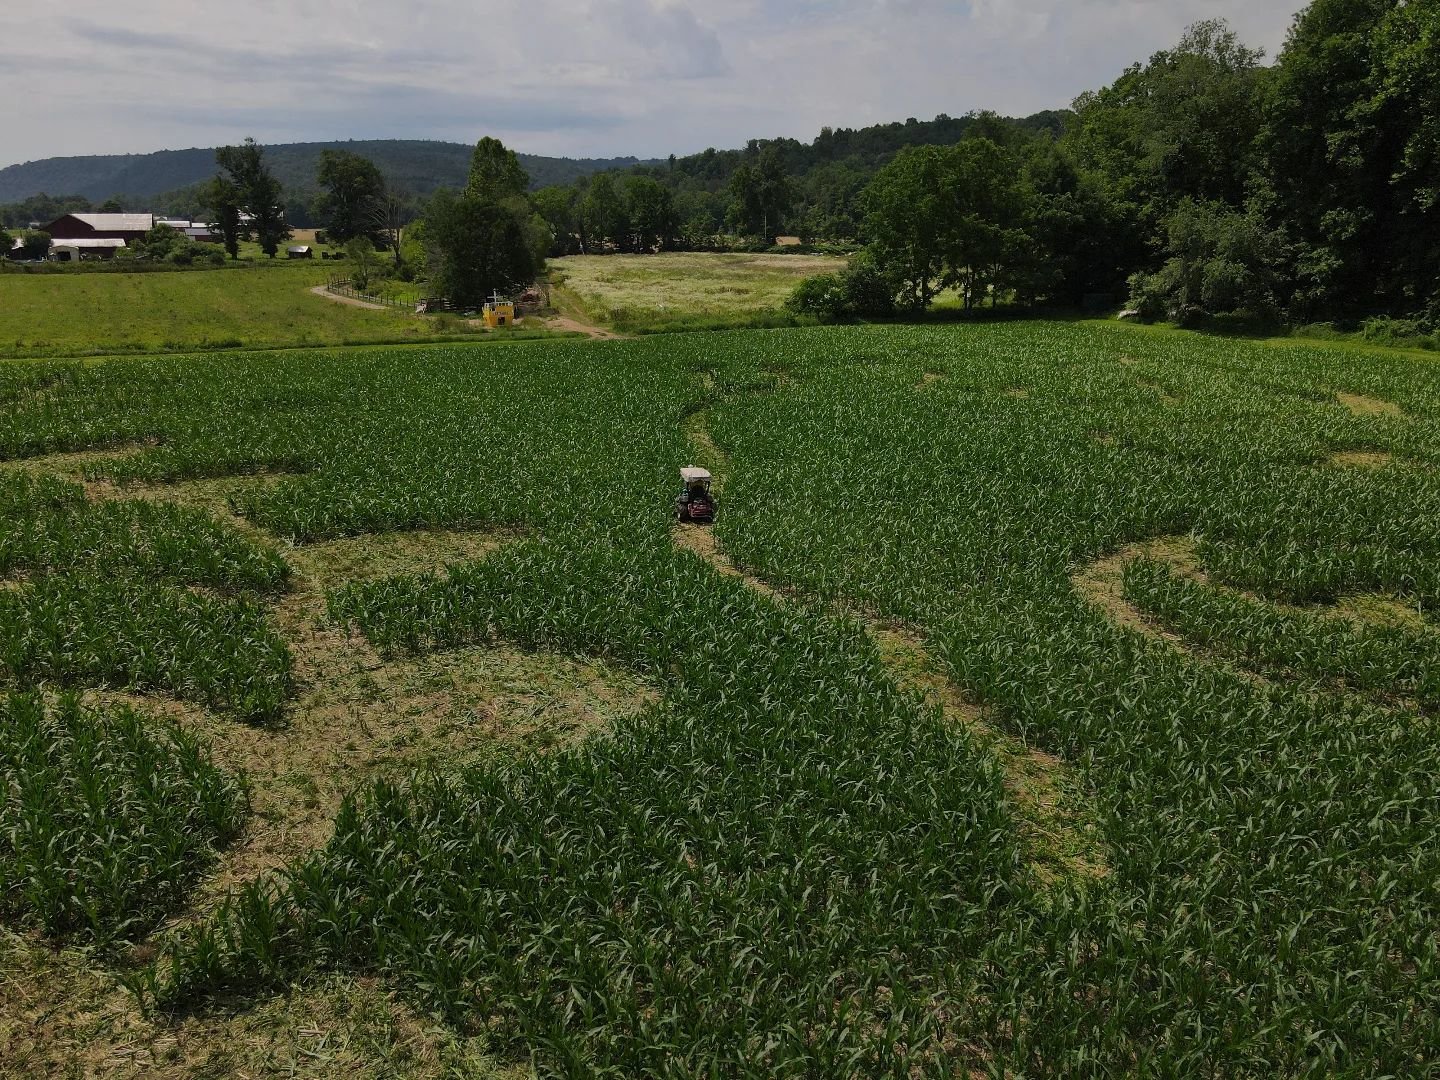 The Corn Maze Guy